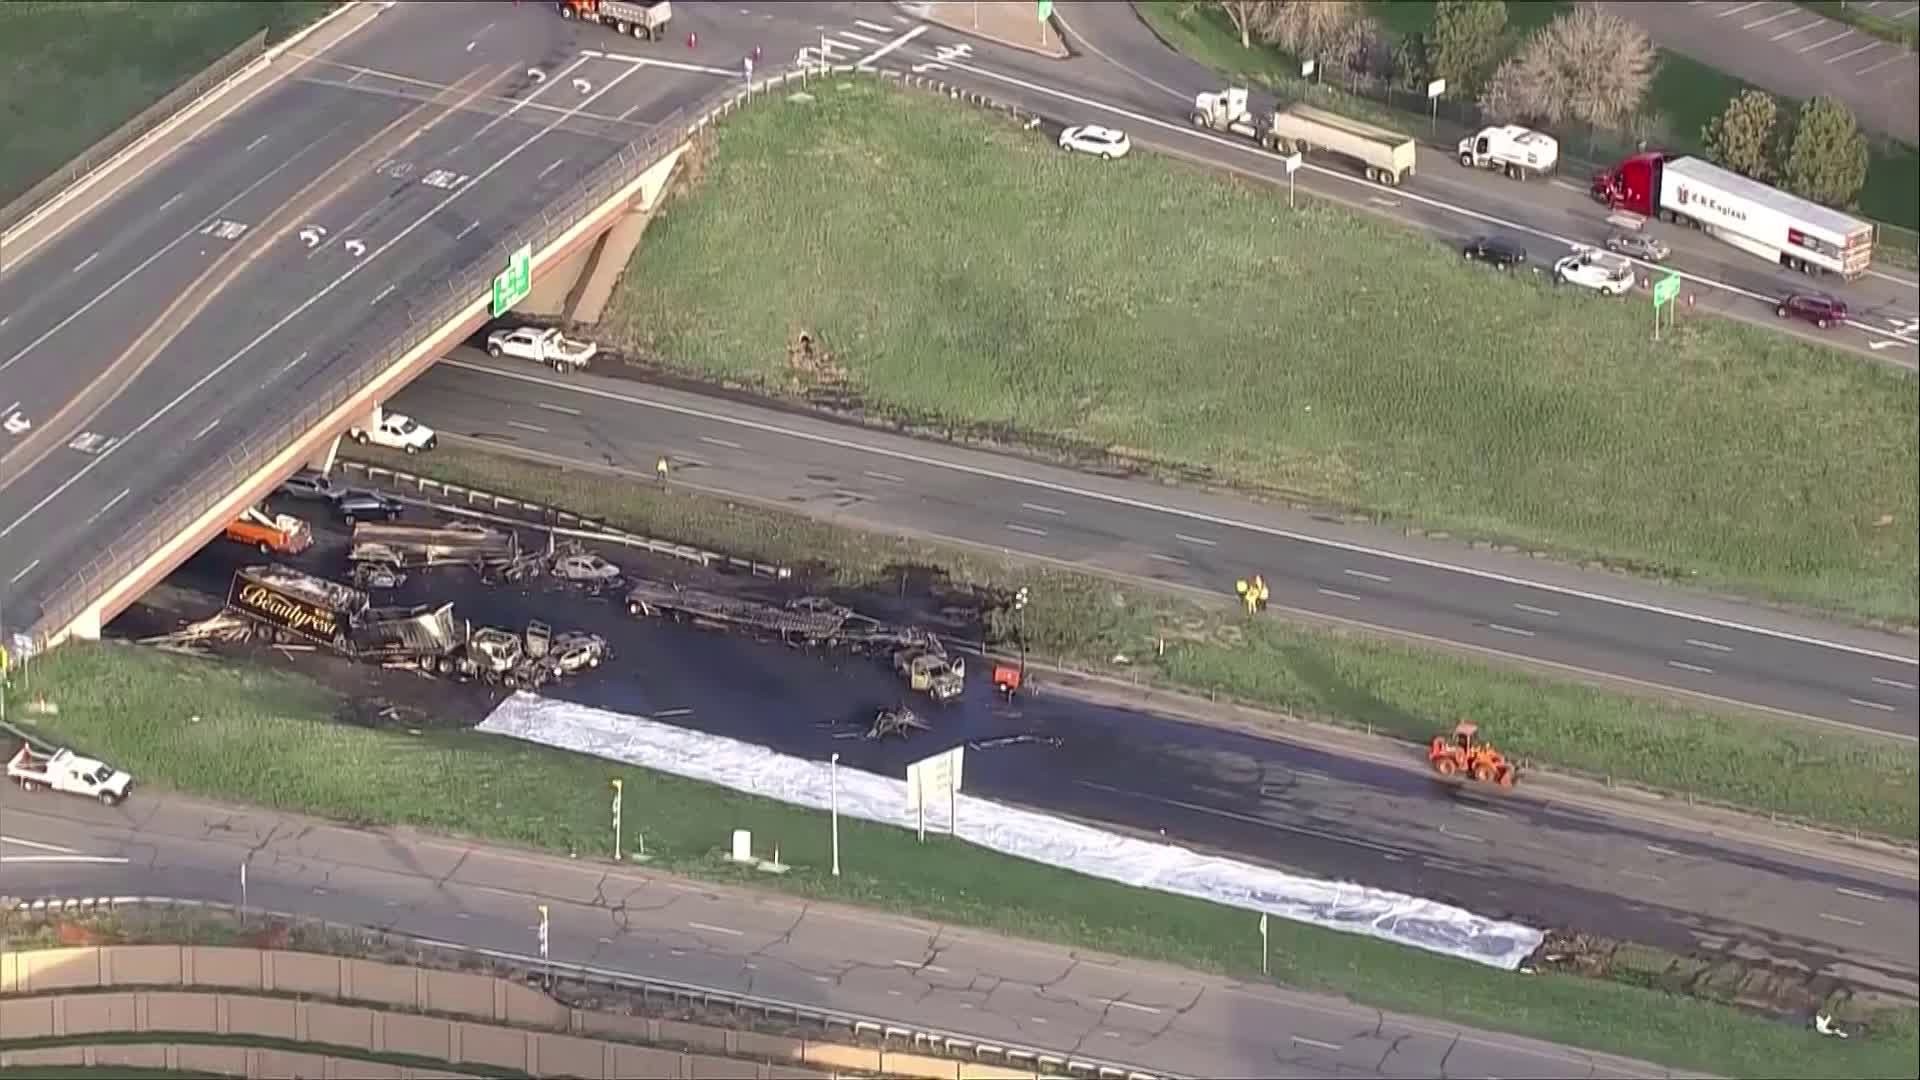 Fiery Crash on I-70 Kills 4 (CBS News)